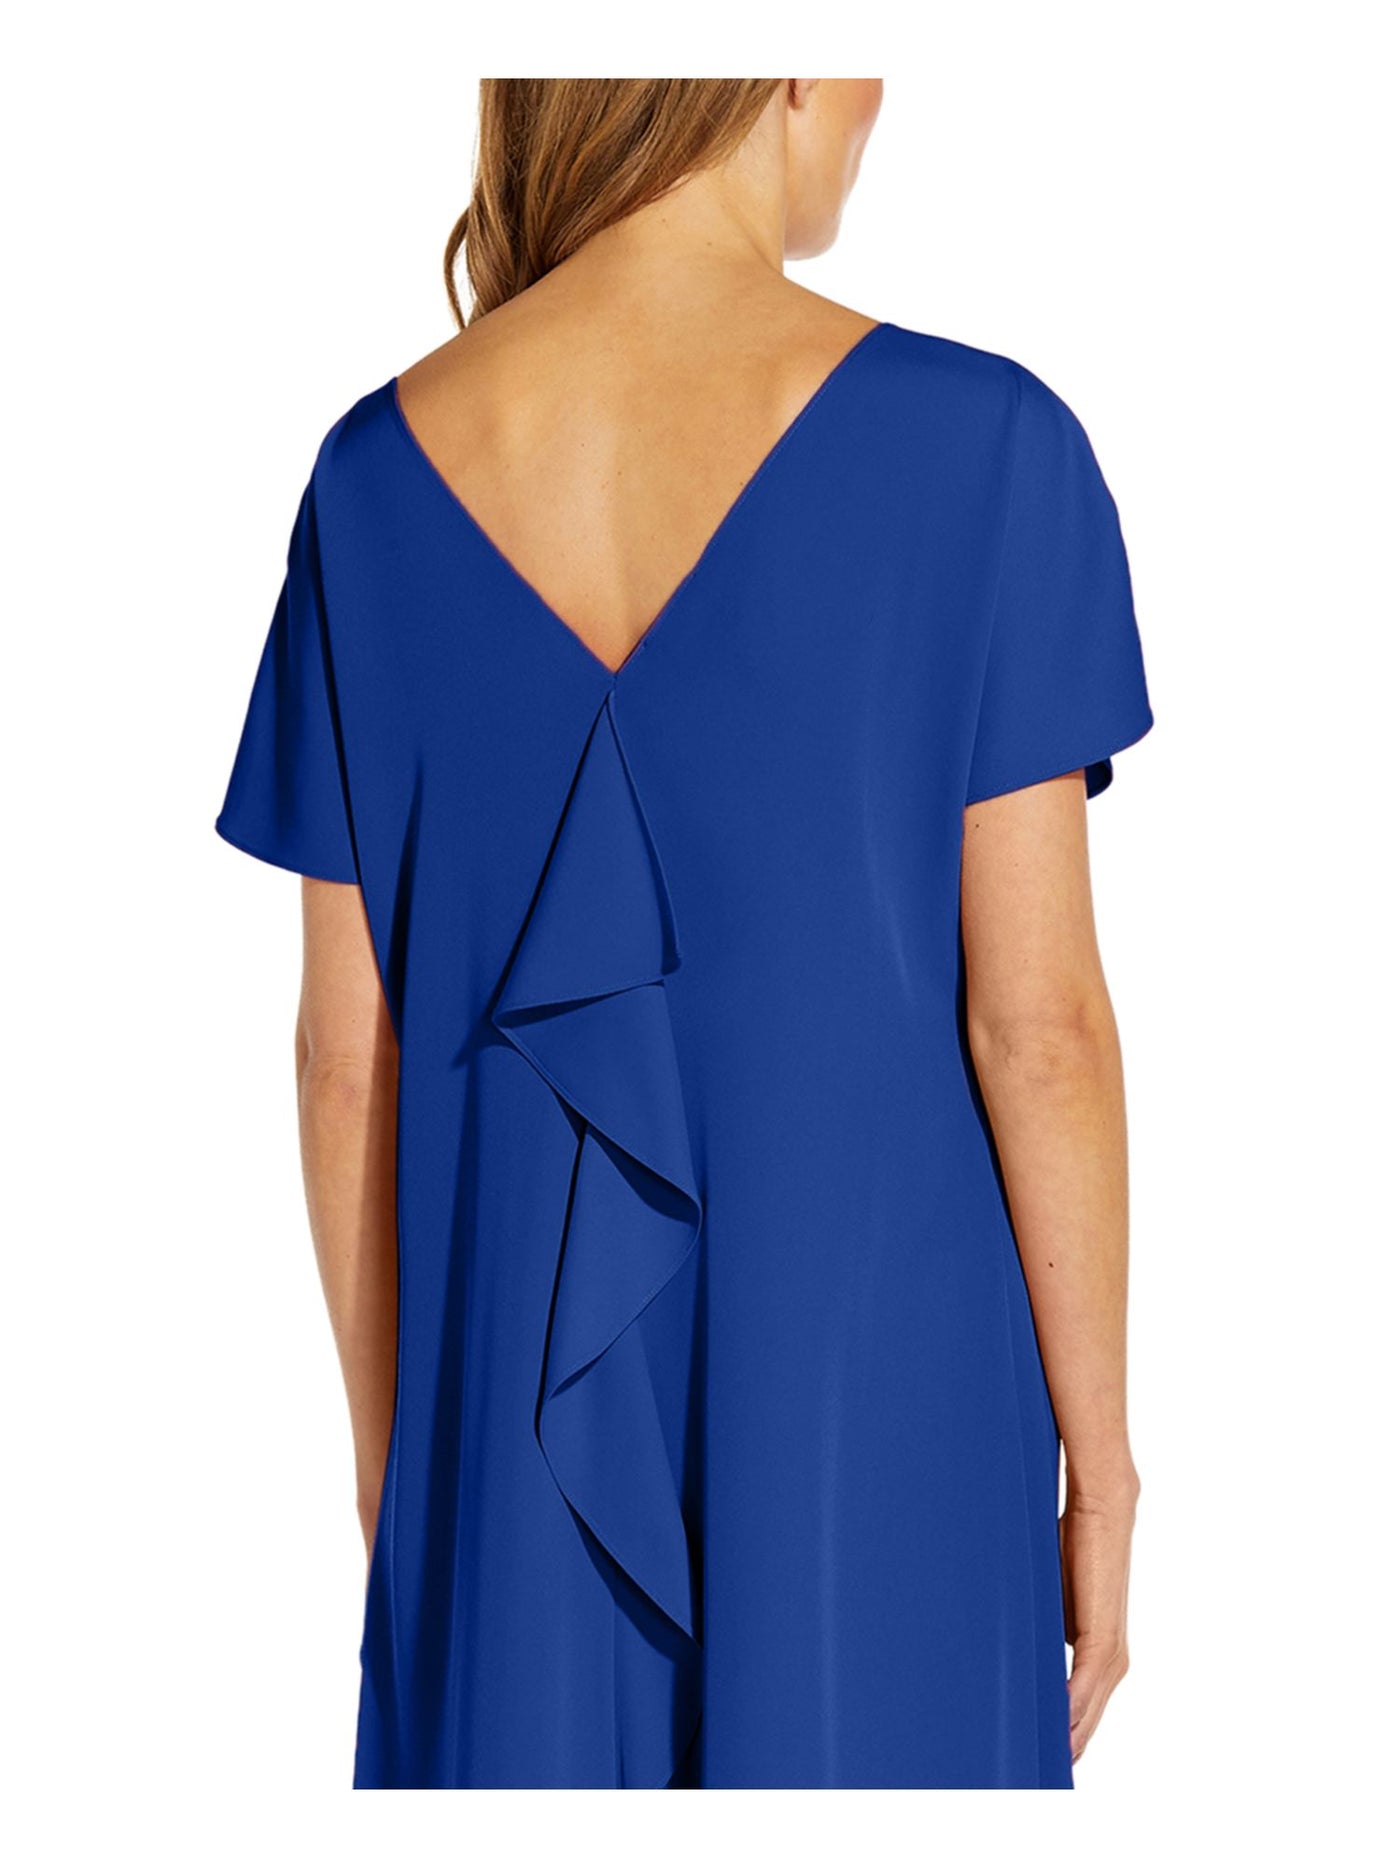 ADRIANNA PAPELL Womens Blue Short Sleeve Boat Neck Below The Knee Evening Hi-Lo Dress 8